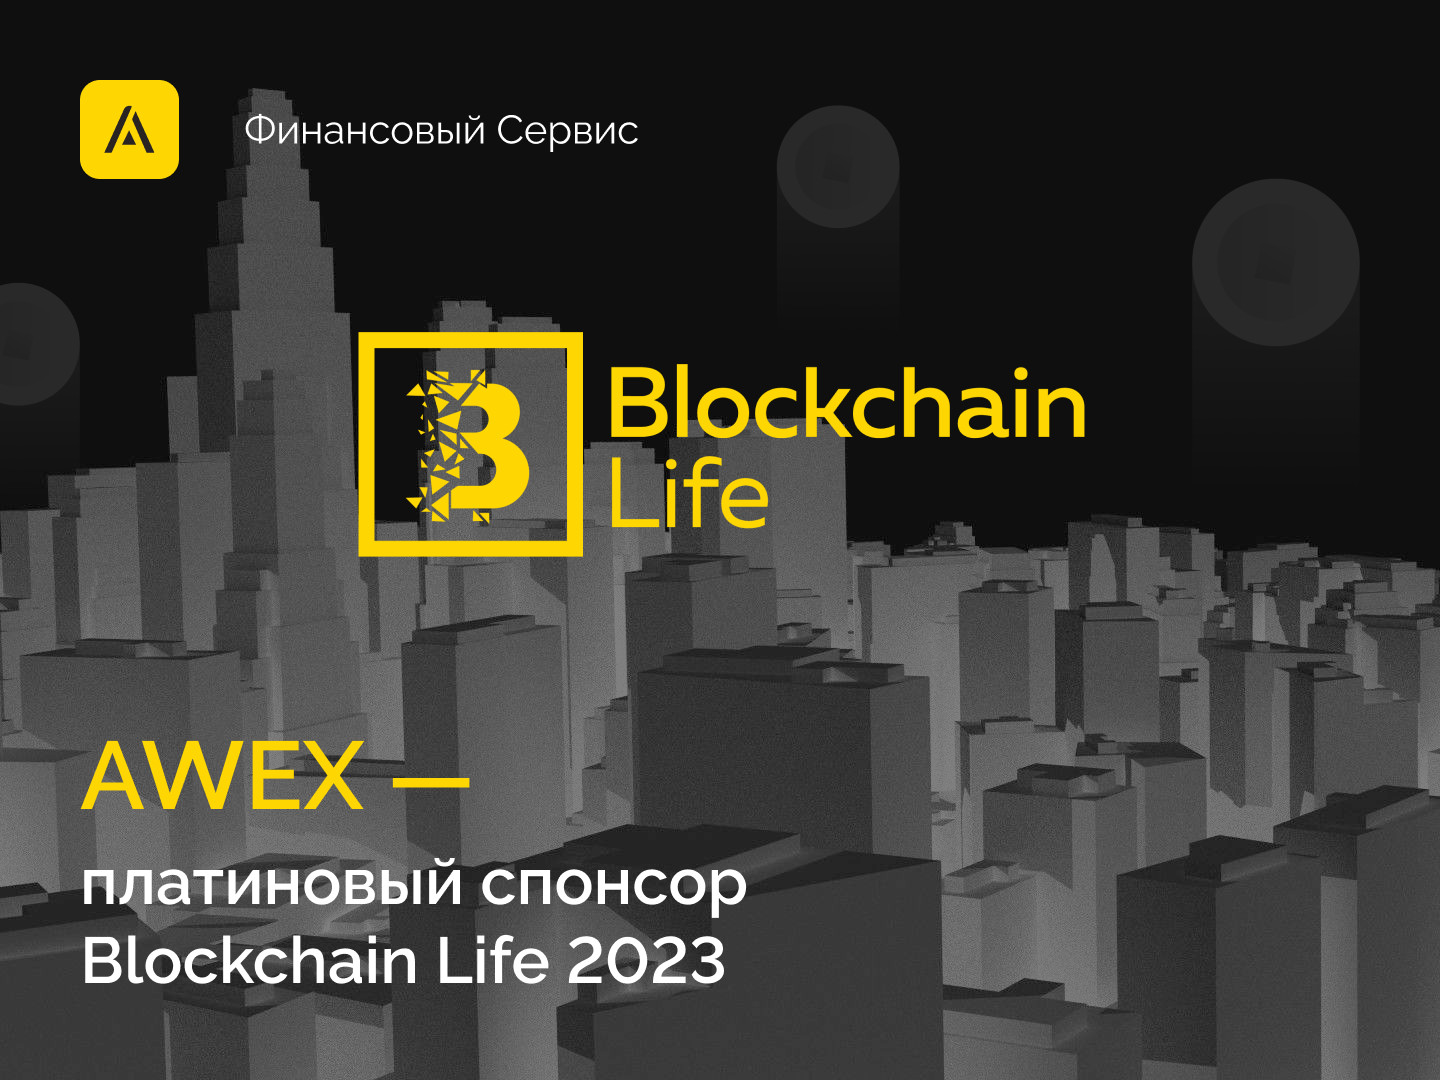 11-й международный форум Blockchain Life 2023